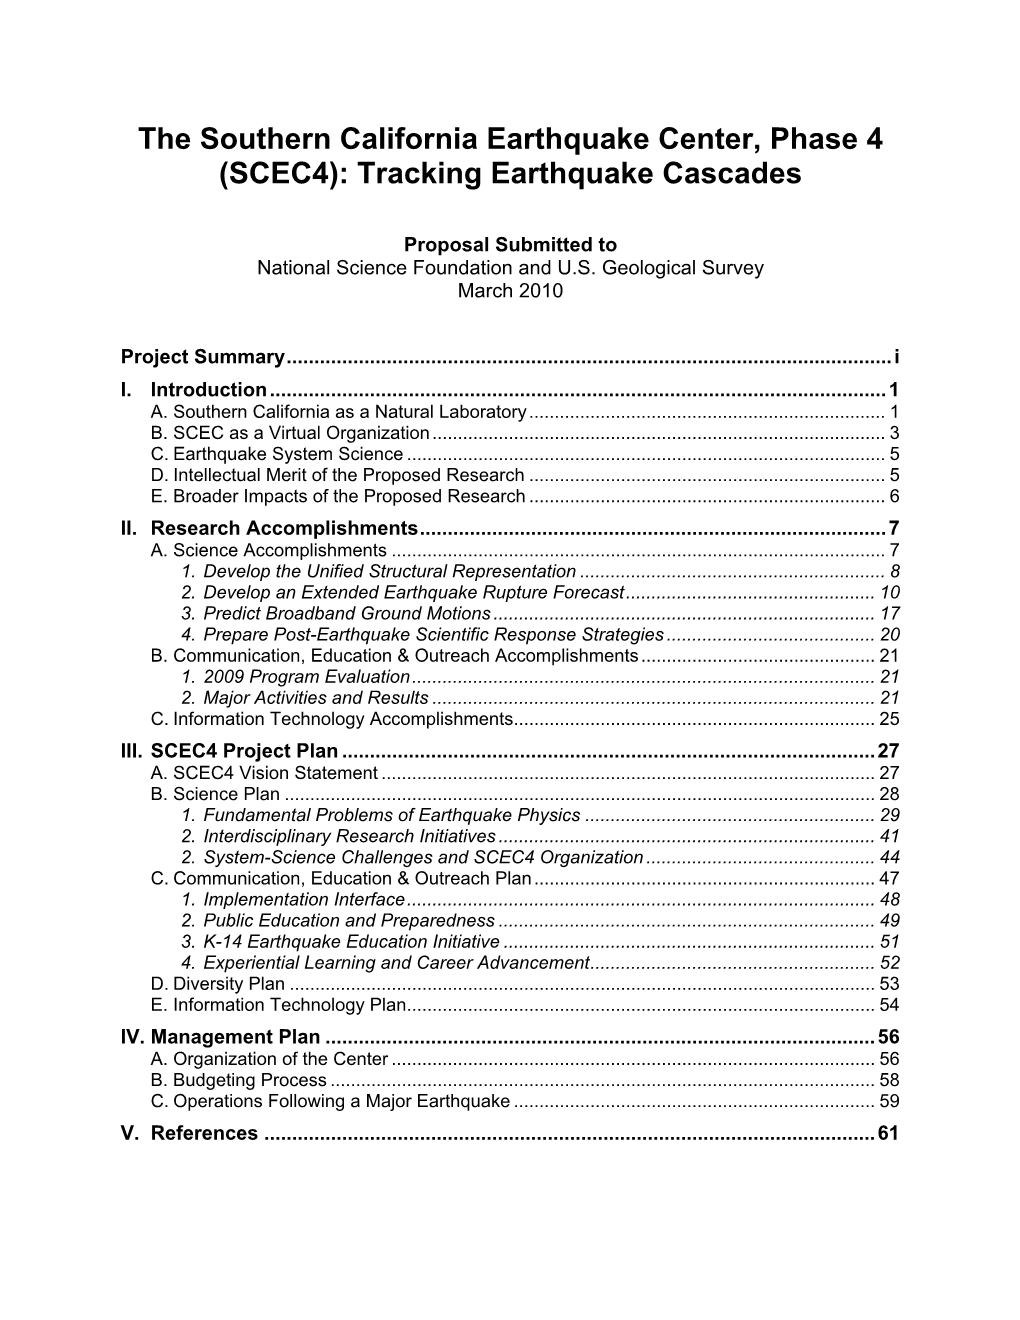 Tracking Earthquake Cascades